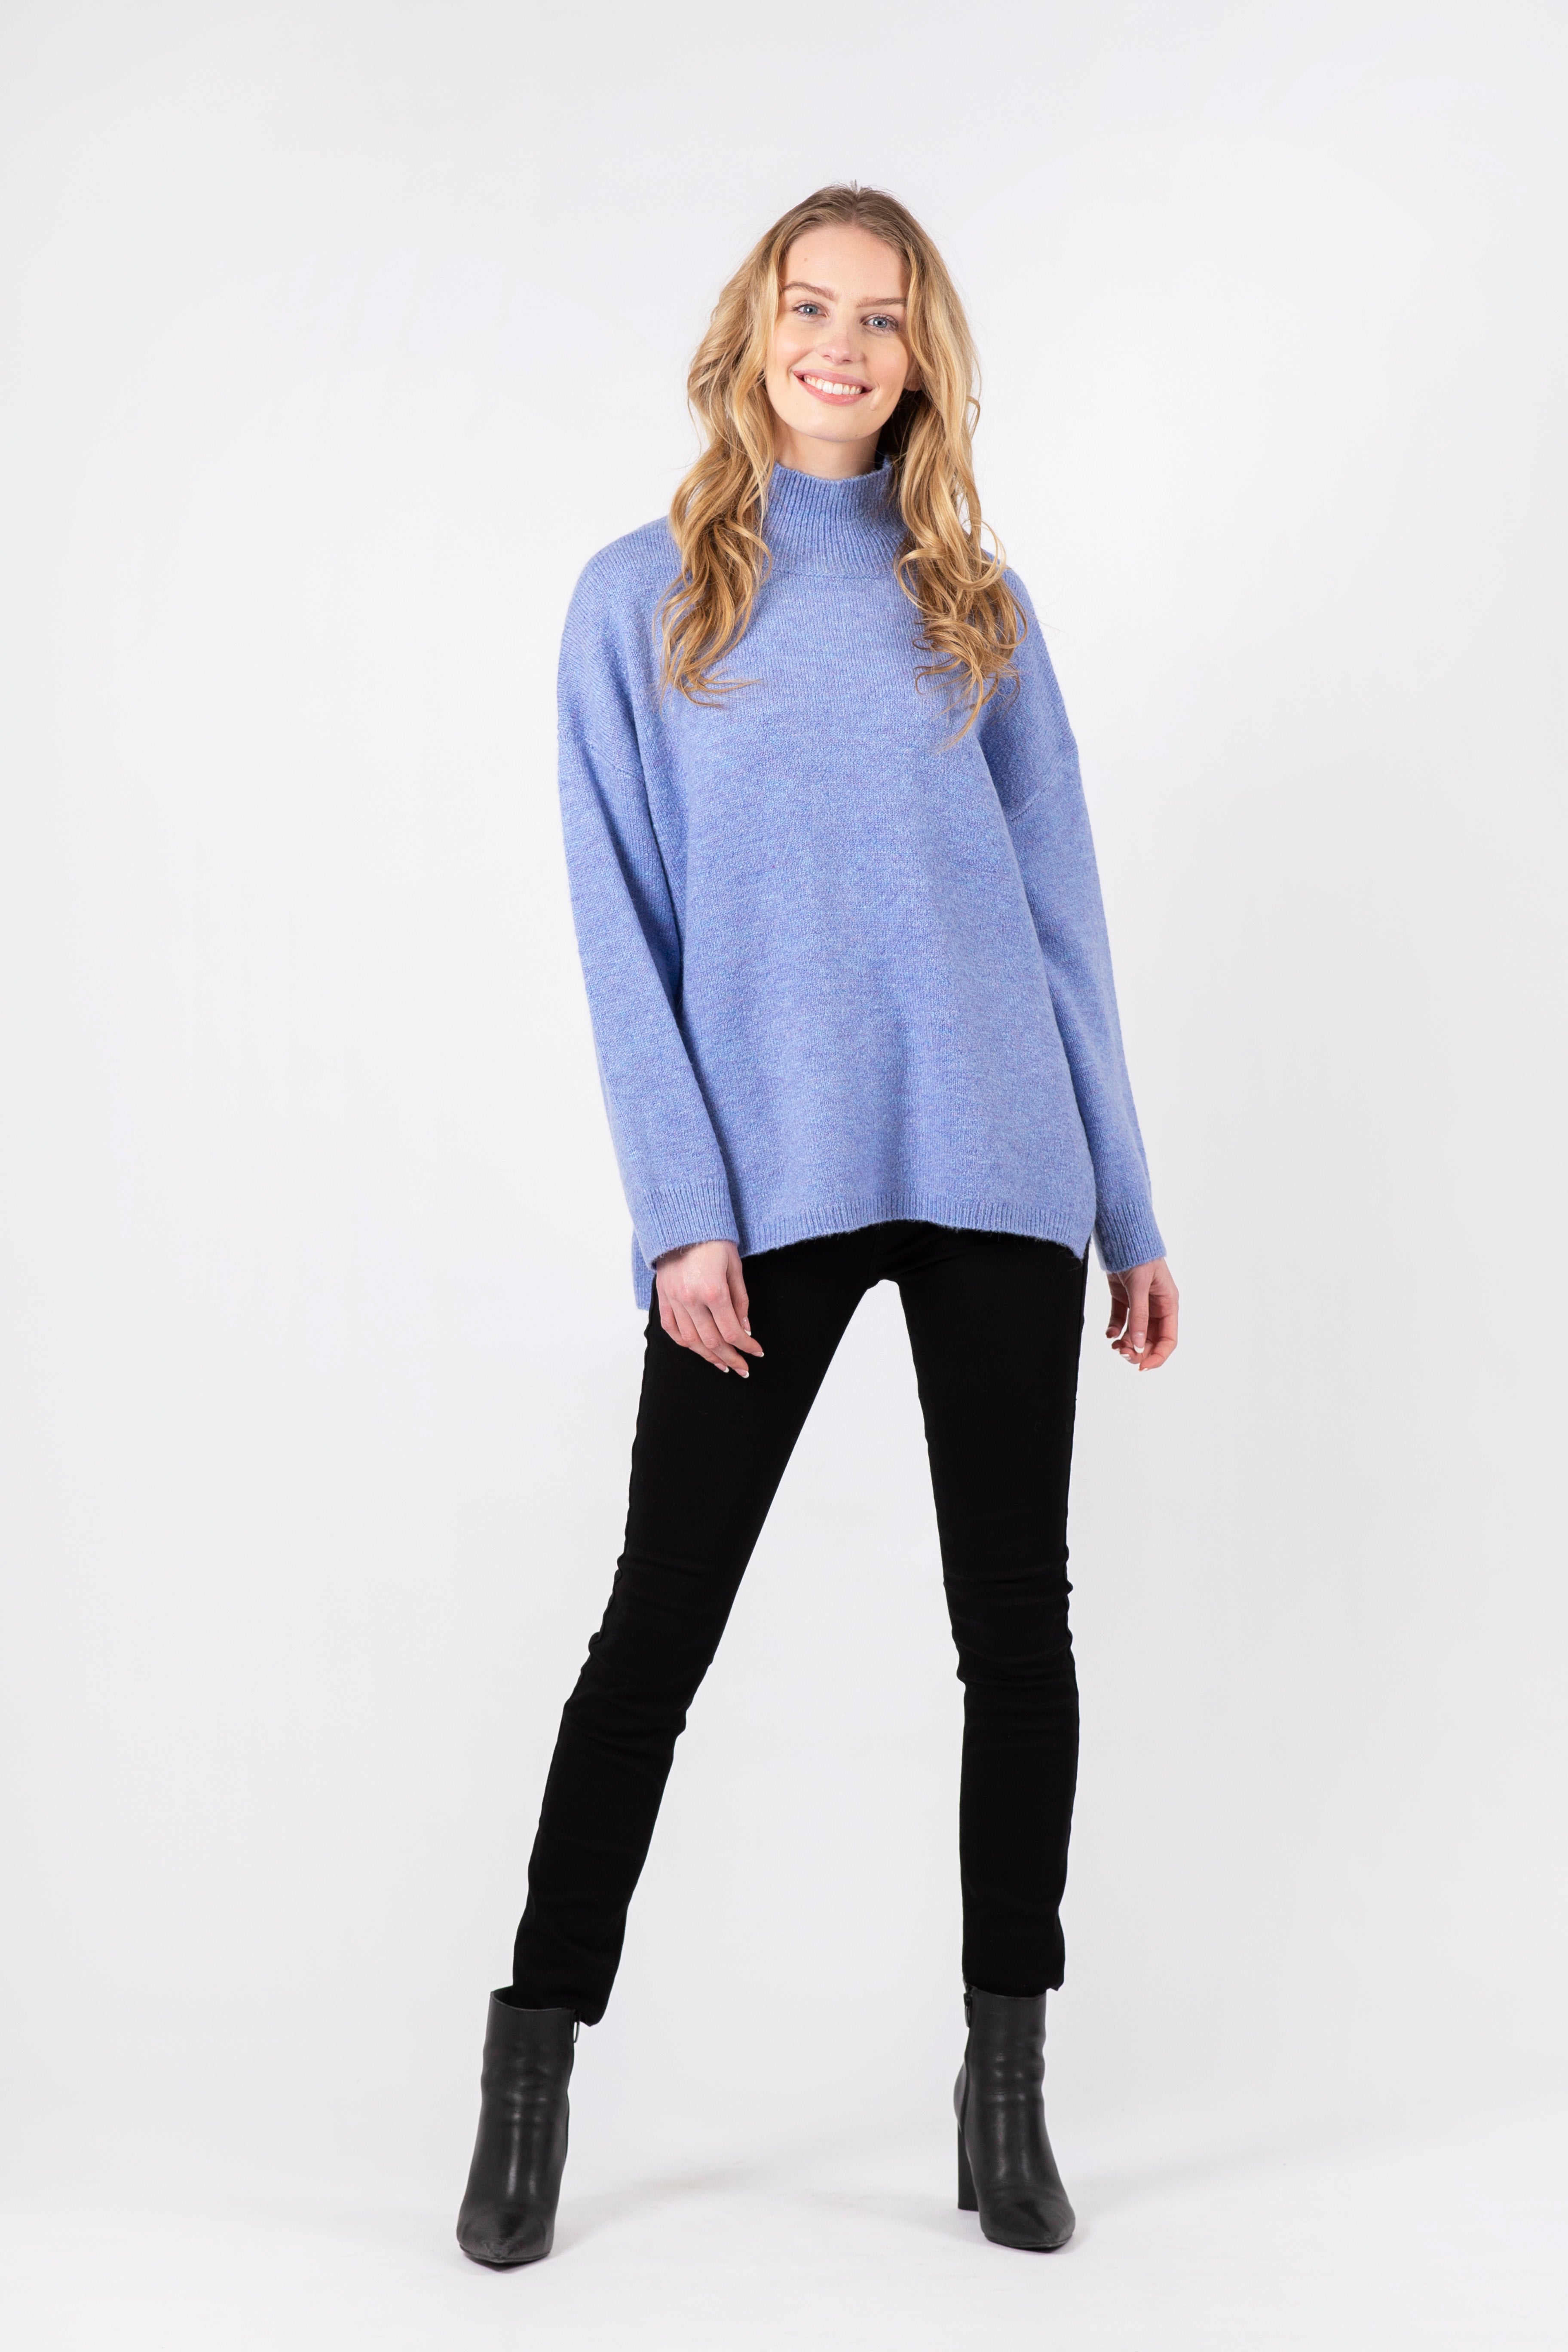 Lyla + Luxe Tulu Oversize Mock Neck Sweater is like a warm hug.  The Periwinkle blue looks fantastic with a dark jean. 